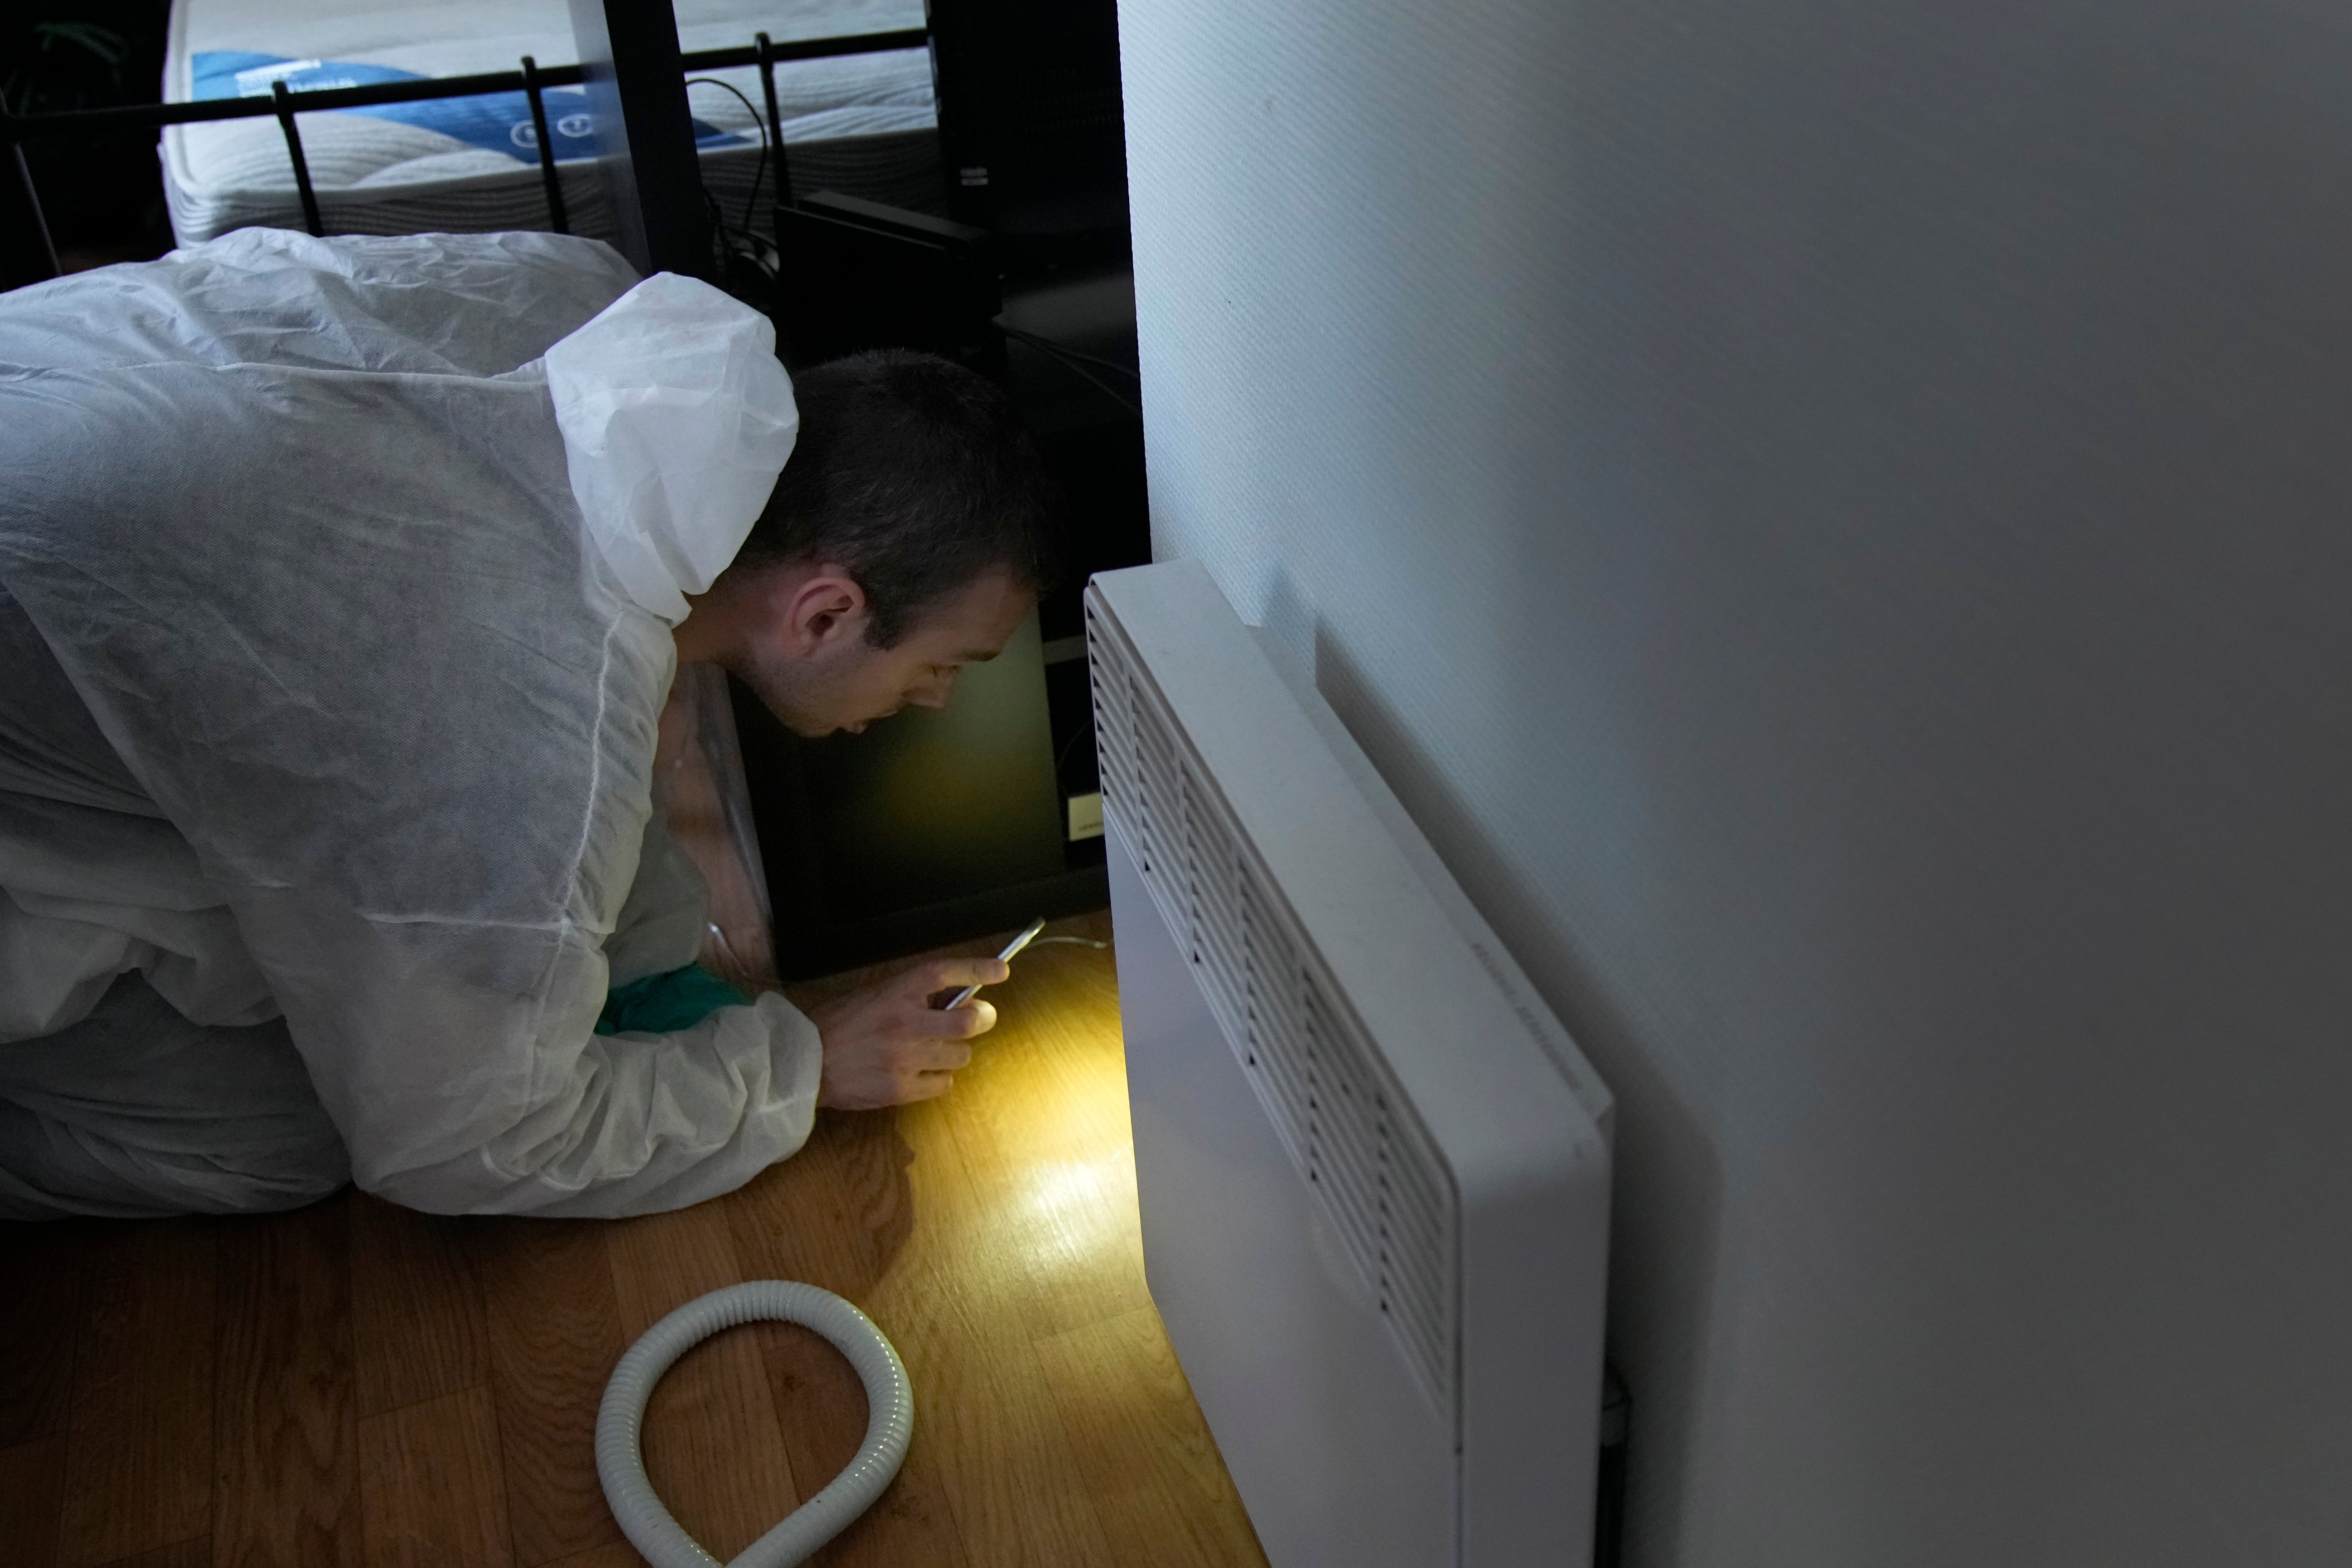 Pest control technician Lucas Pradalier looks for bedbugs in a Paris apartment